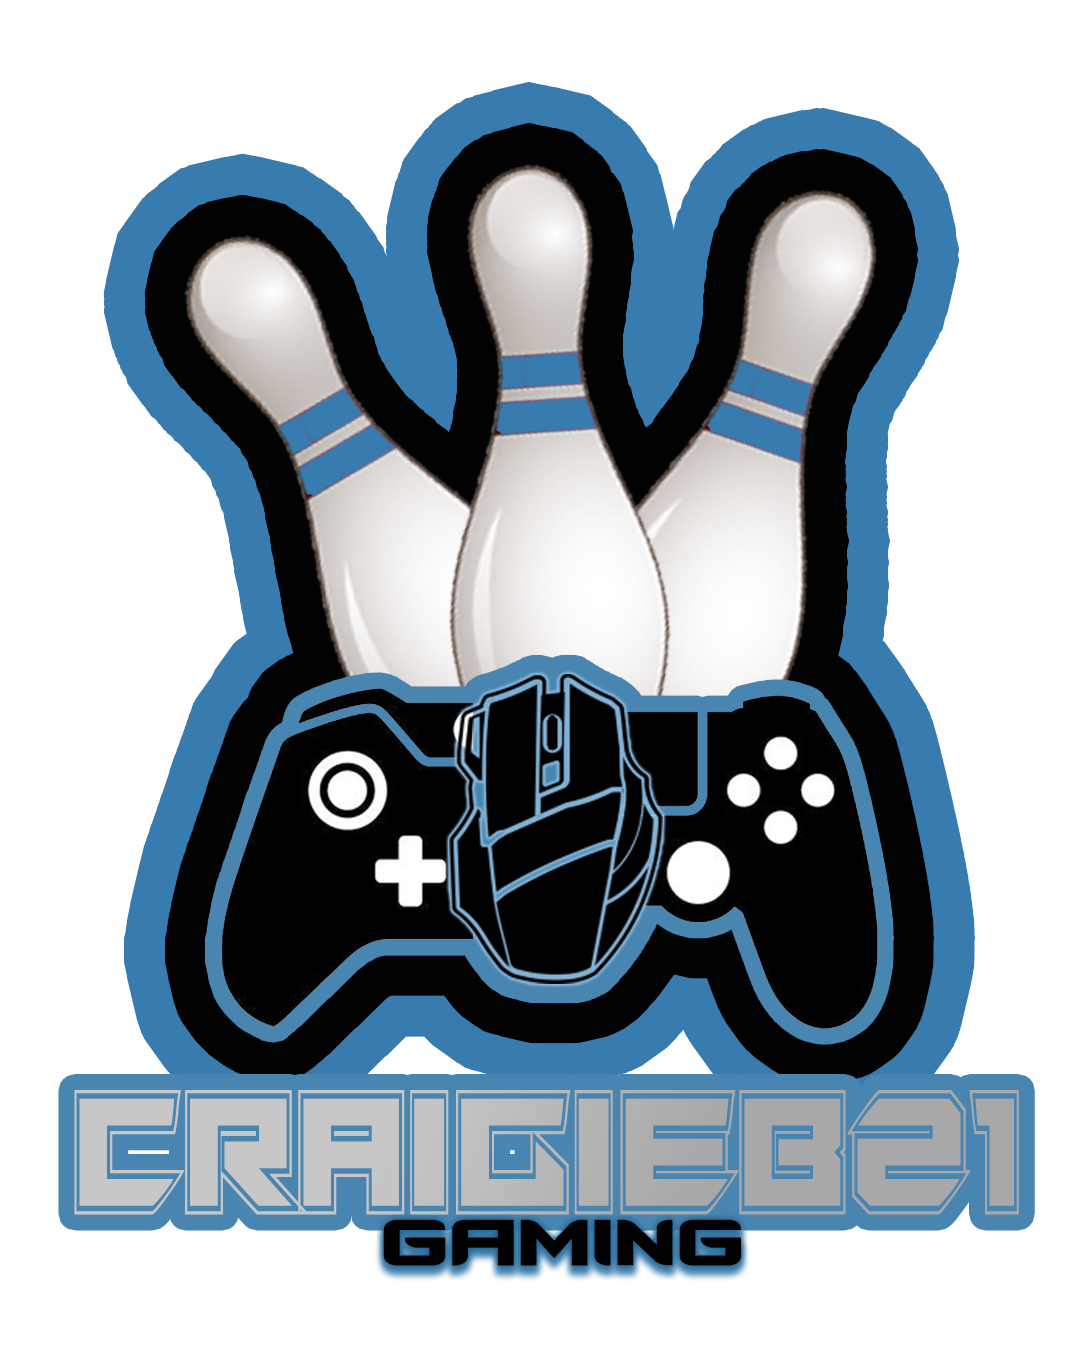 CraigieB21 Gaming